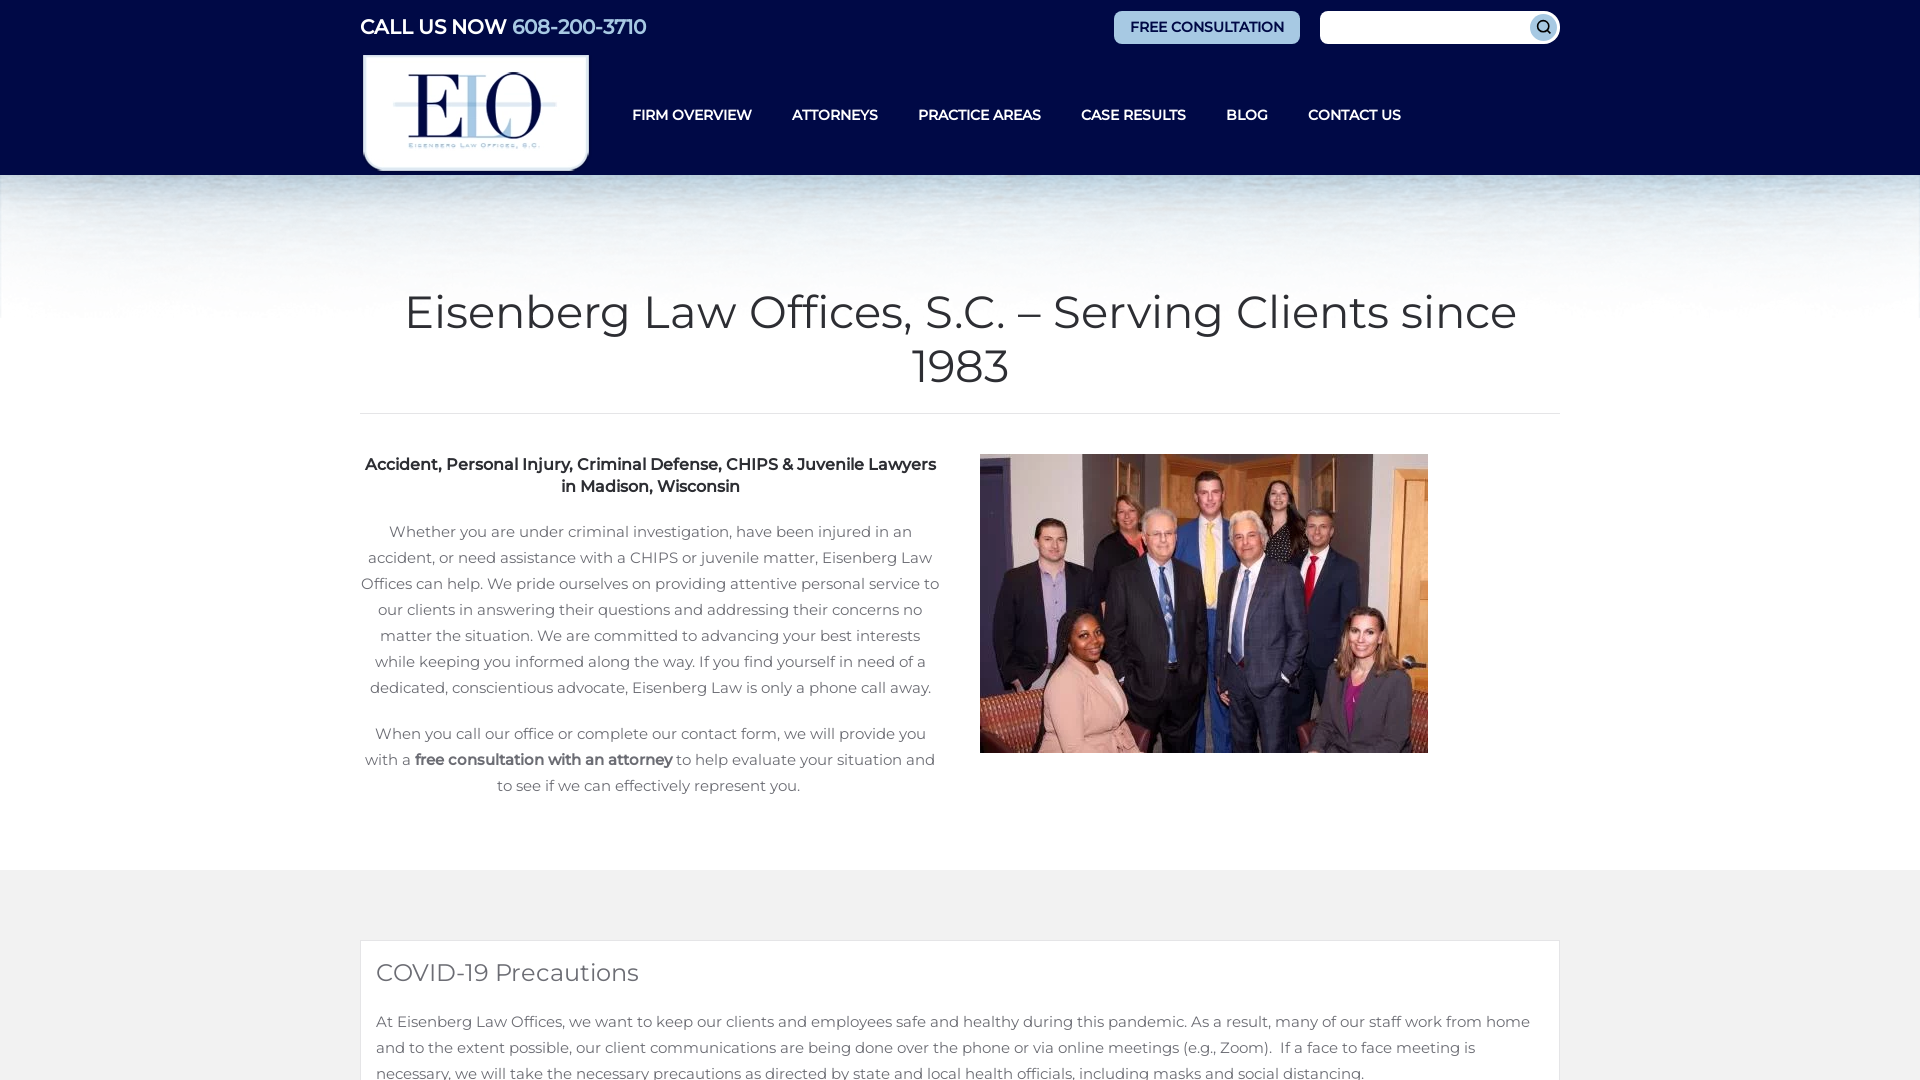 Eisenberg Law Offices